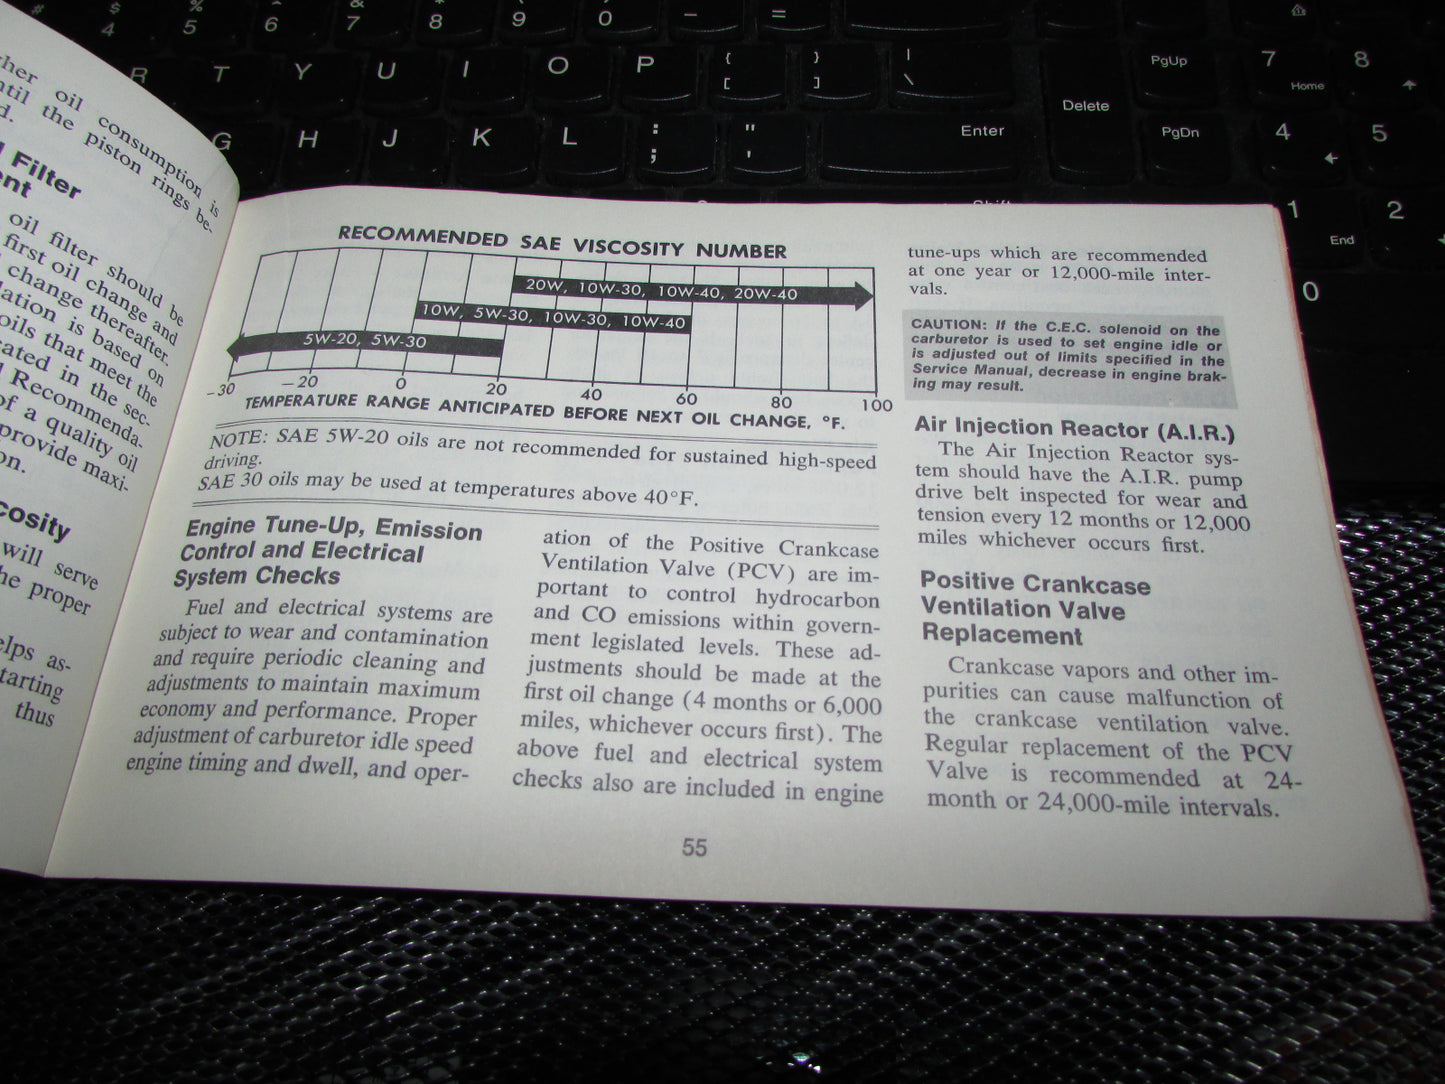 Chevrolet Nova (1971) Owners Manual